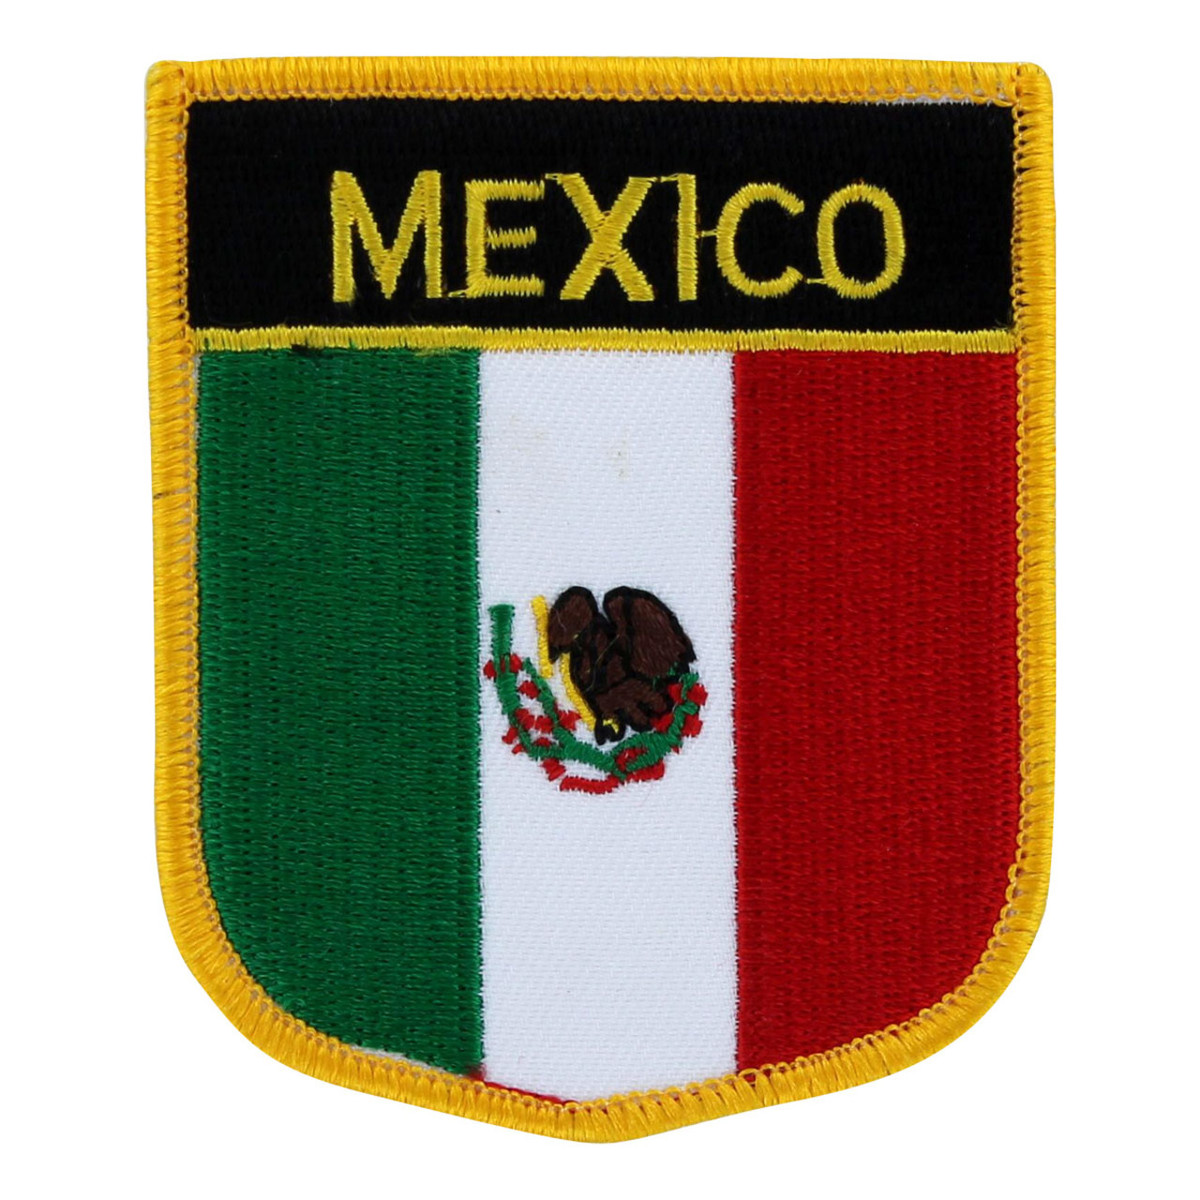 Mexico Patch - 3 x 2.5